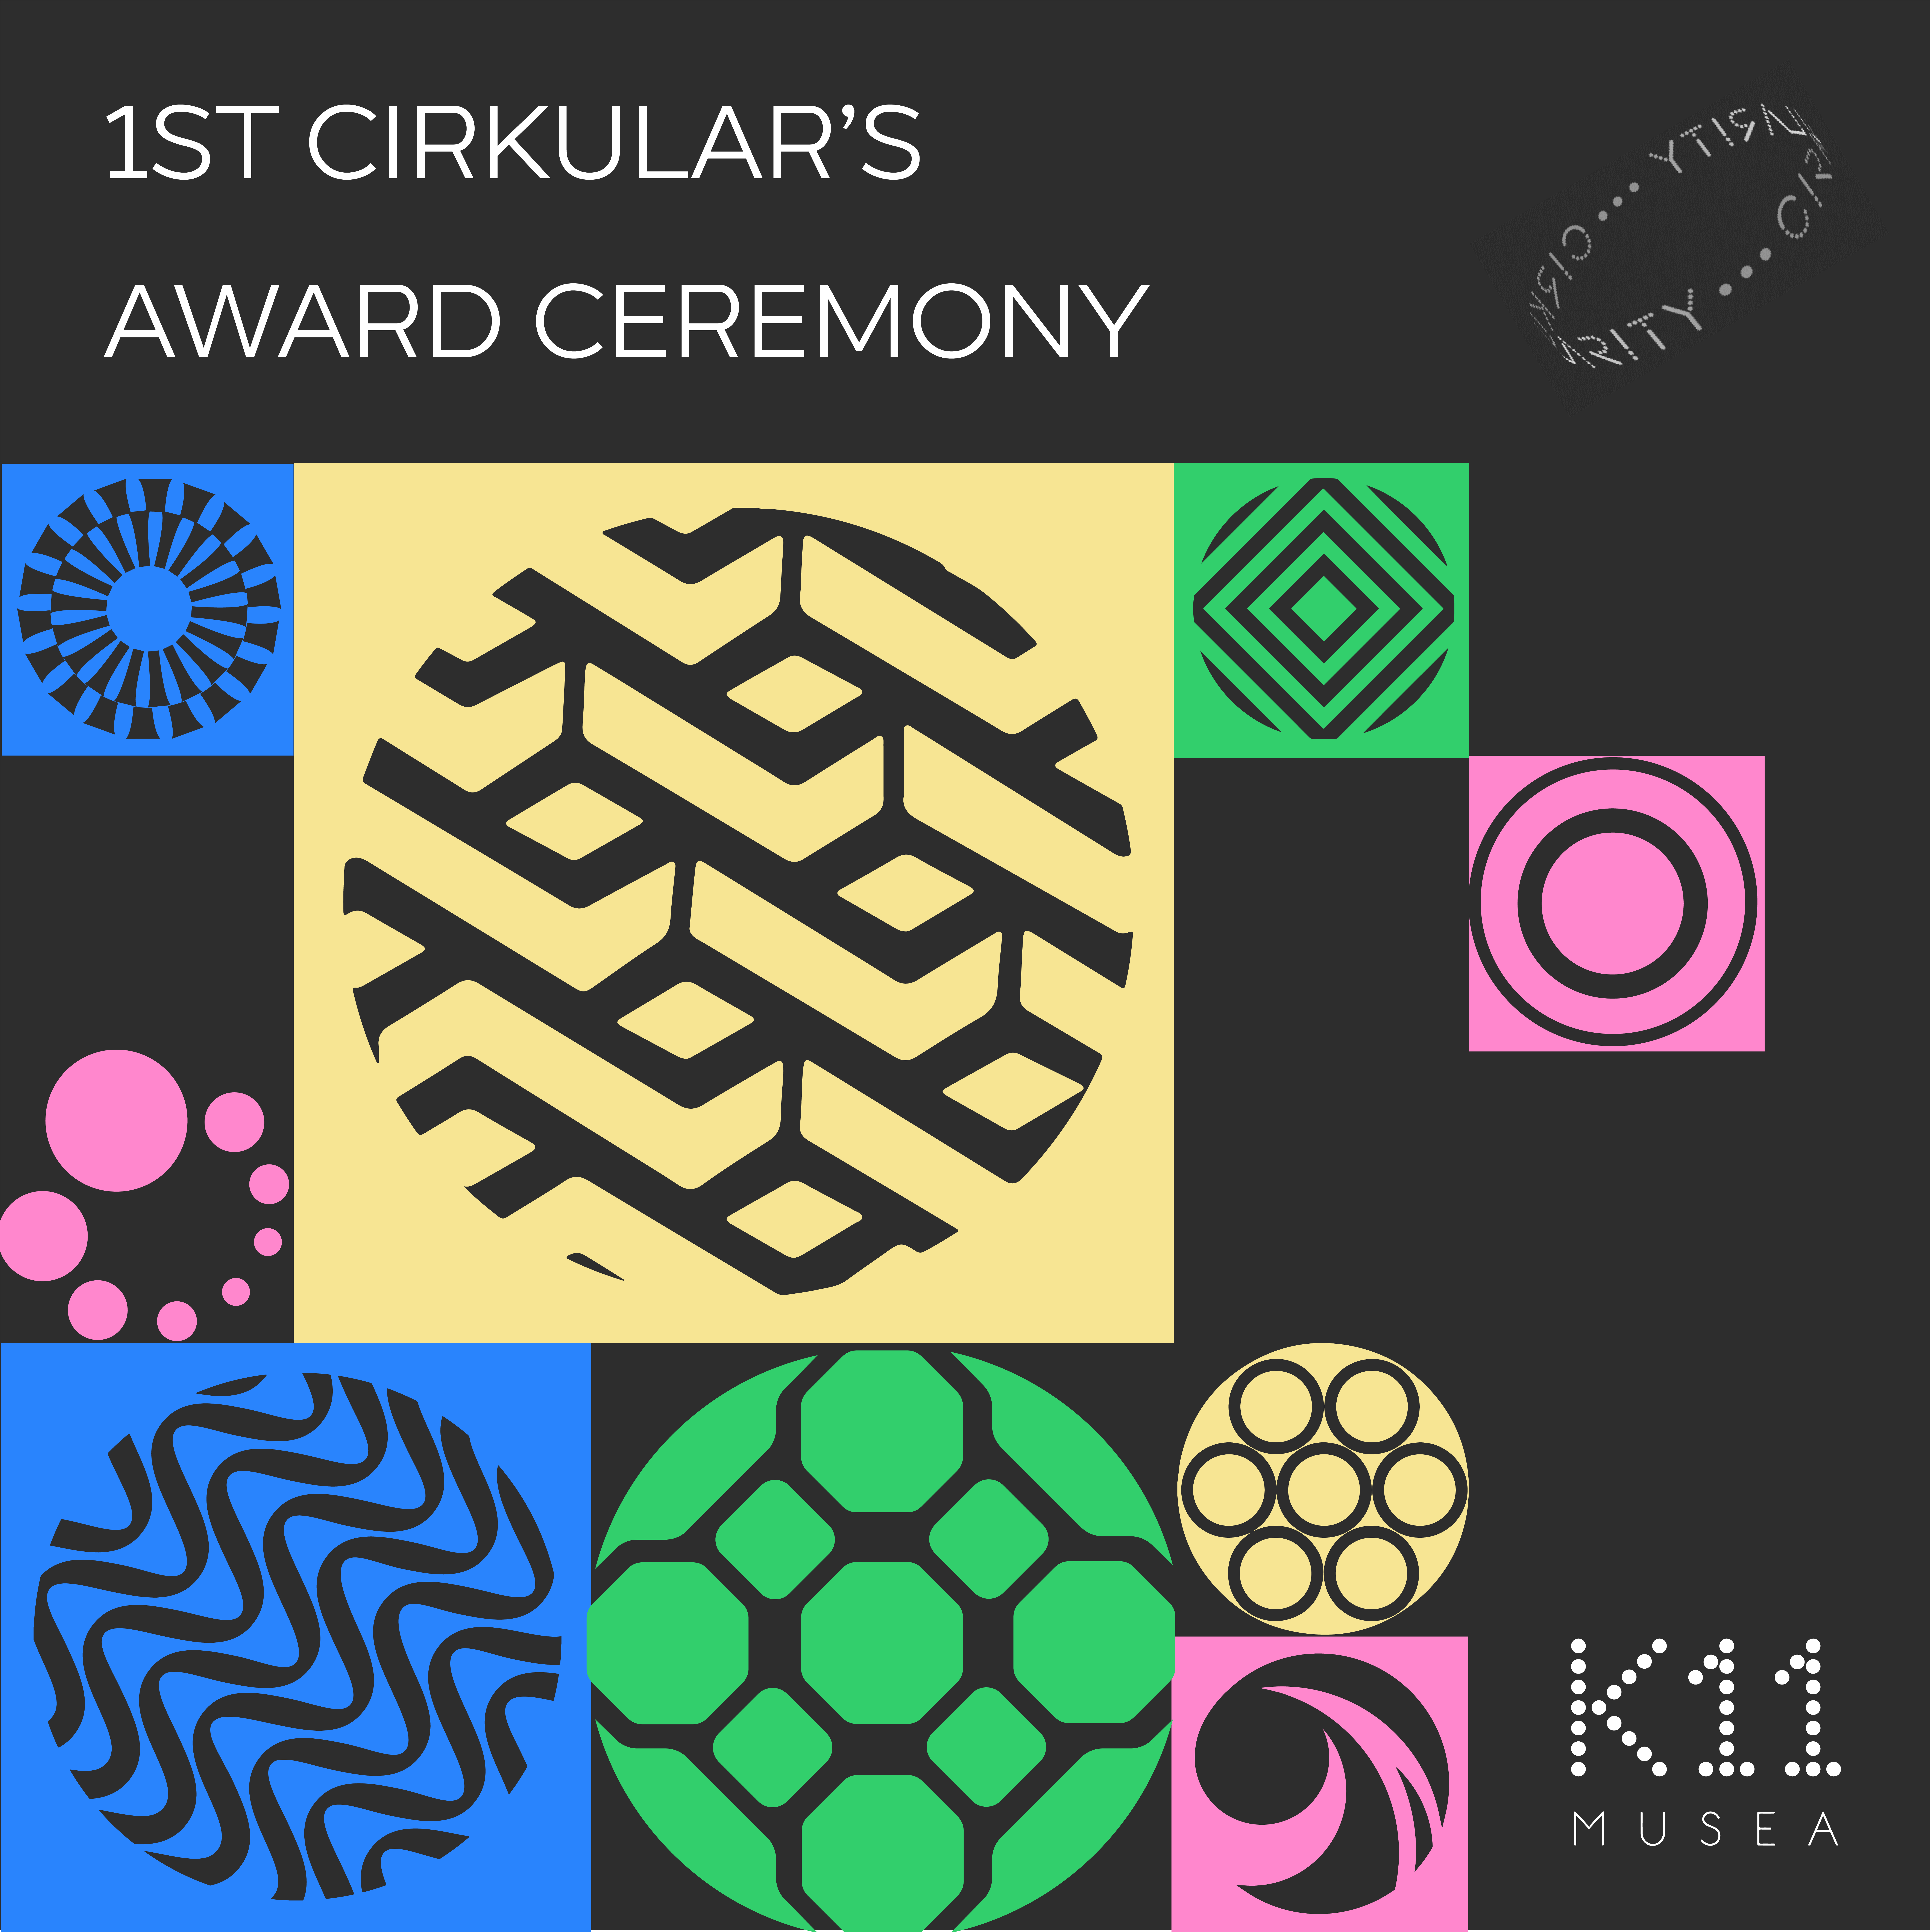 K11 Cirkularity